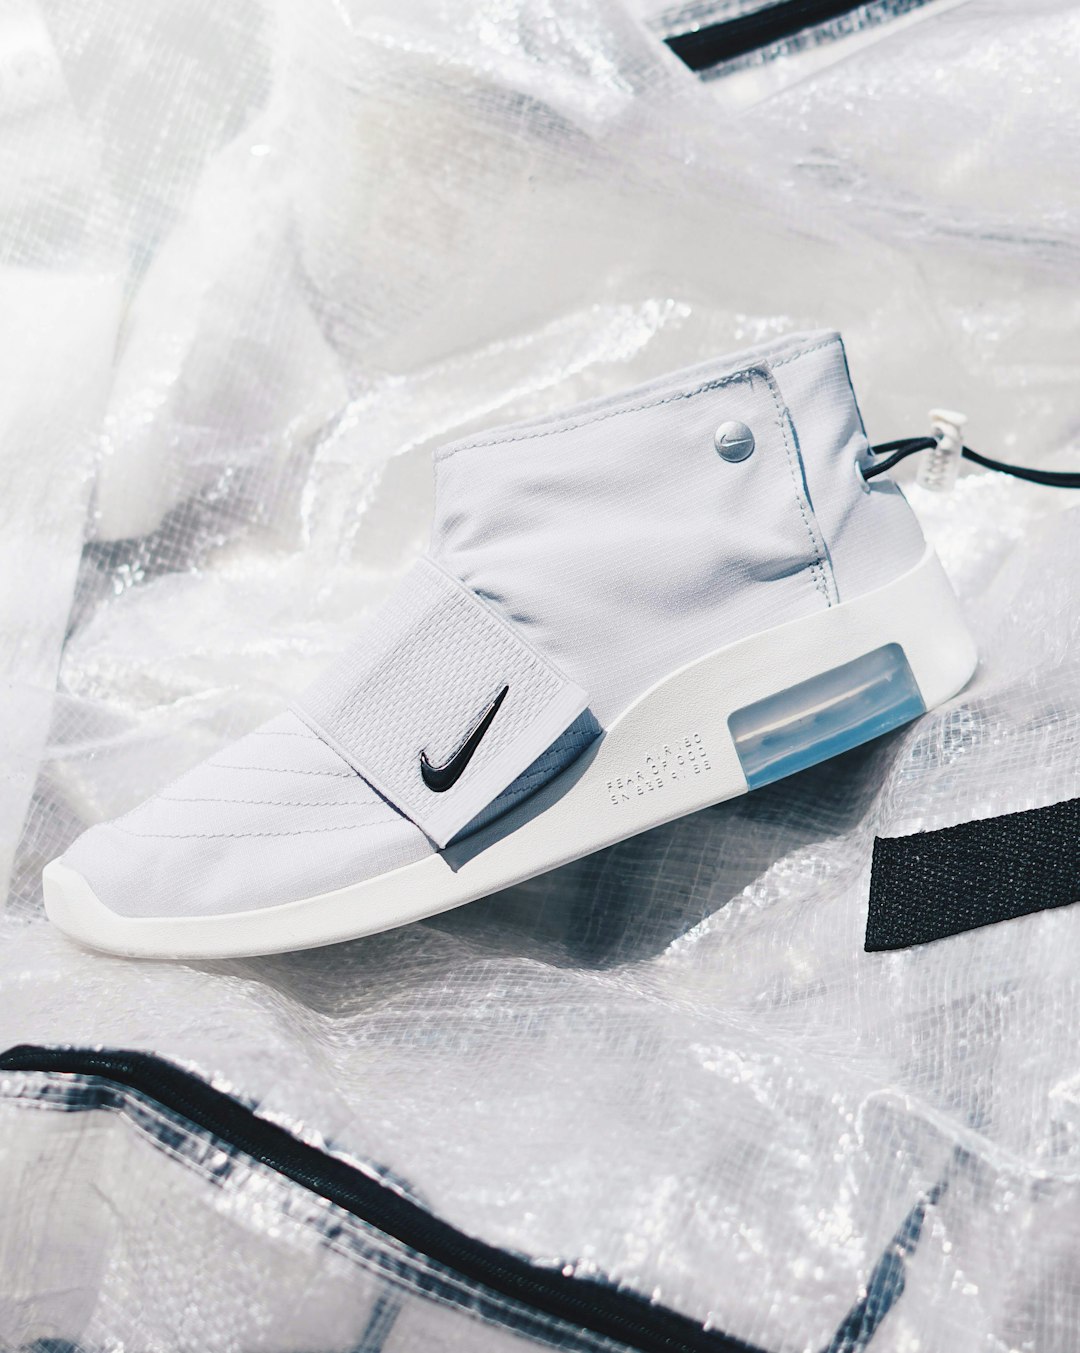 white and black nike athletic shoe